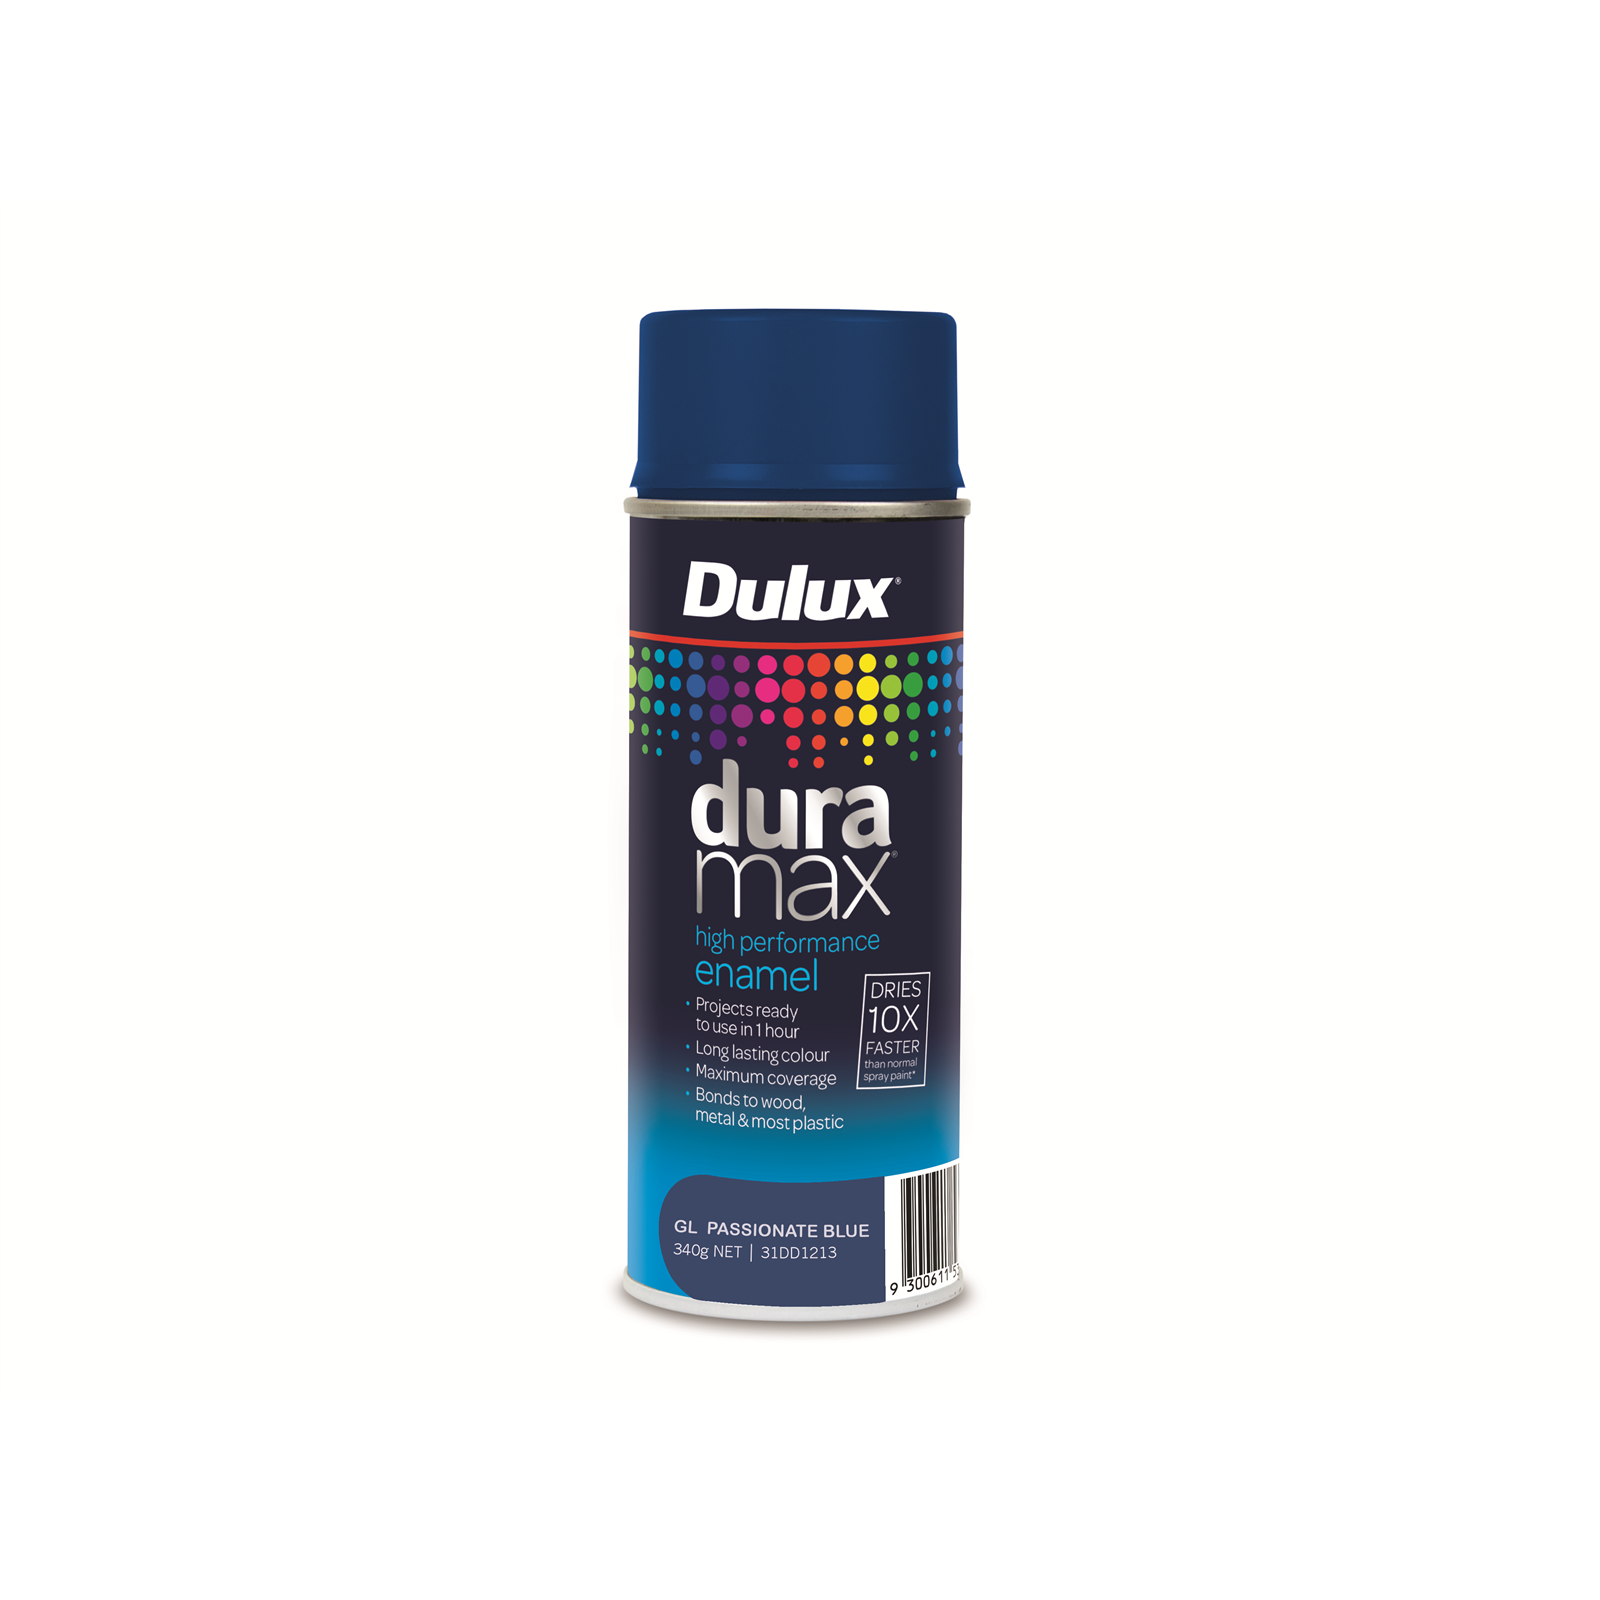 Dulux Duramax 340g Gloss Passionate Blue Spray Paint